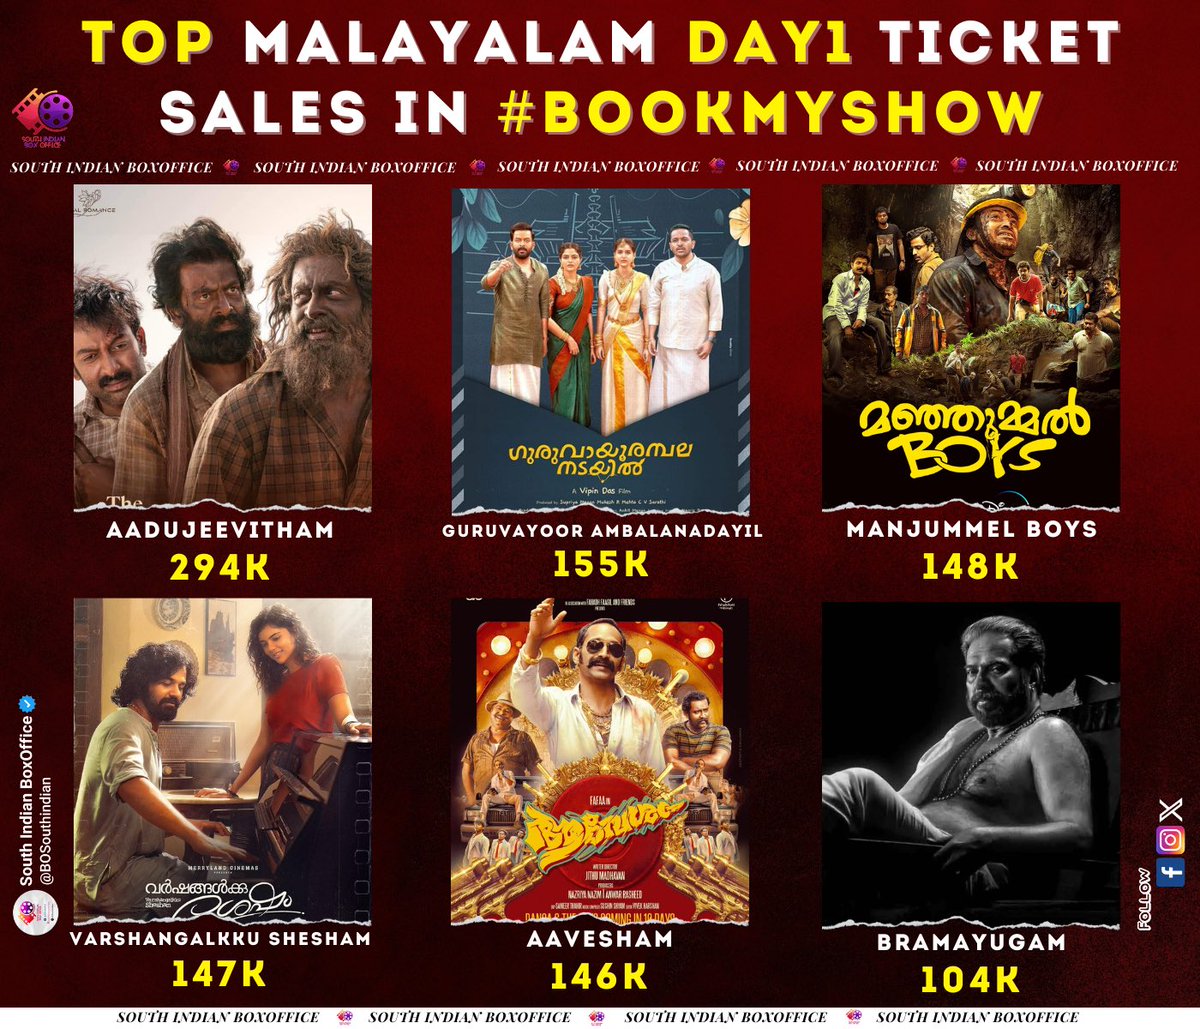 Top Malayalam Day1 Ticket Sales in #BookMyShow 

🔹#Aadujeevitham - 294K 
🔹#GuruvayoorAmbalaNadayil - 155K
🔹#ManjummelBoys - 148K
🔹#VarshangalkkuShesham - 147K
🔹#Aavesham - 146K
🔹#Bramayugam - 104K
🔹#Neru - 103K
🔹#KannurSquad - 95K
🔹#AbrahamOzler - 92K